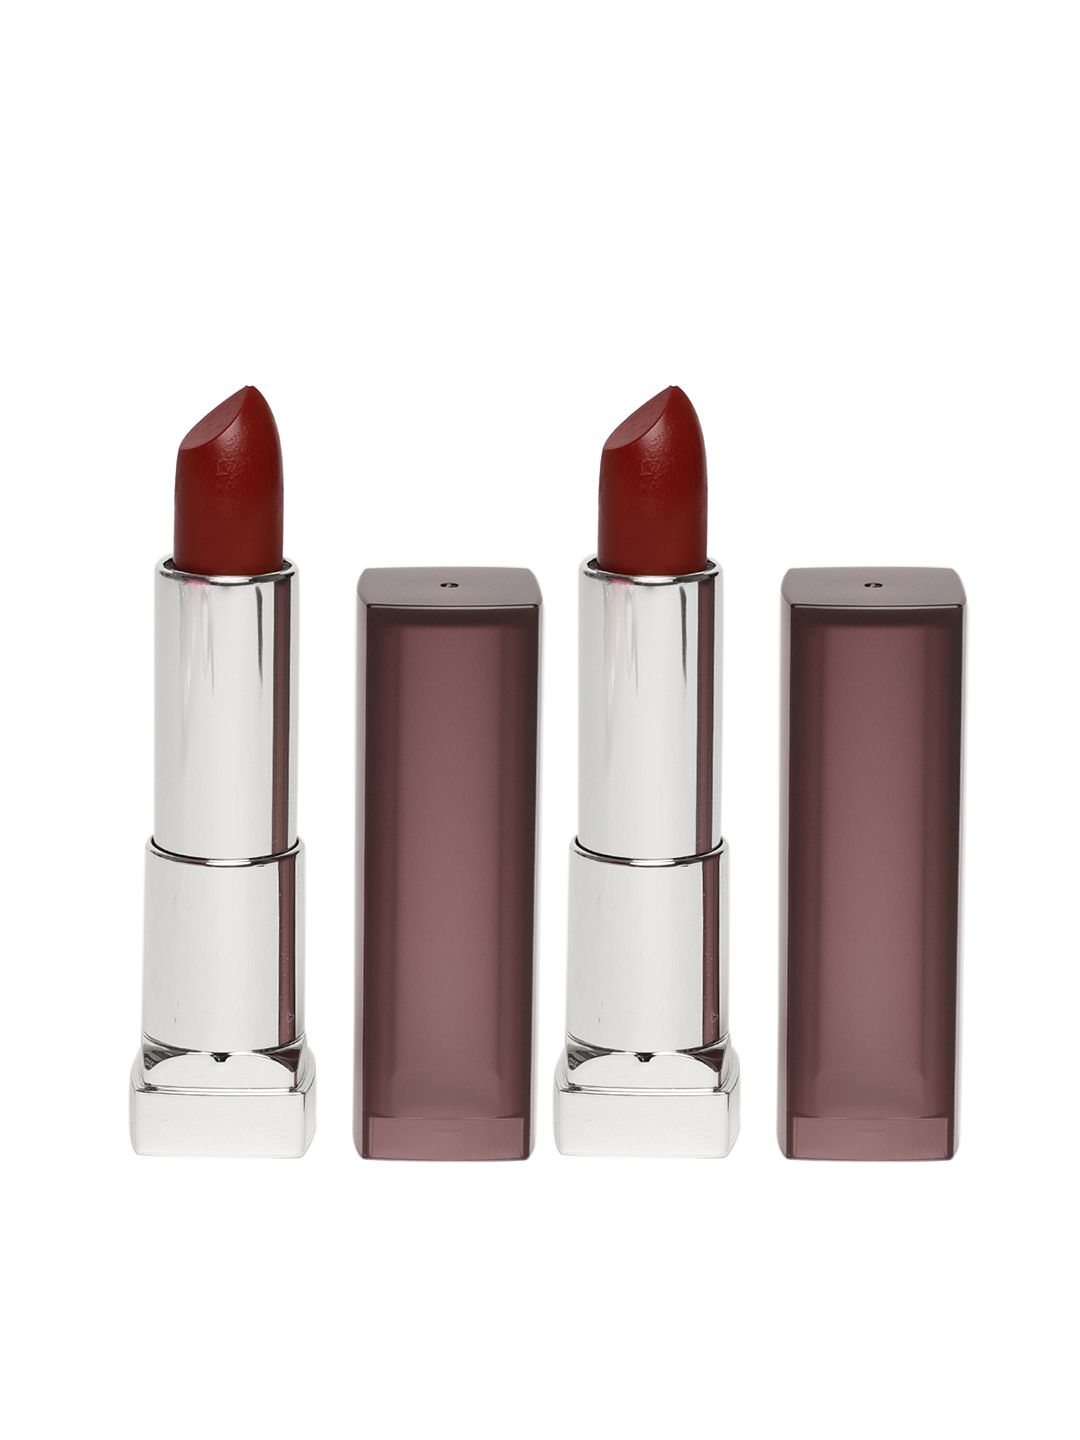 Maybelline New York Set of 2 Divine Wine Color Sensational Creamy Matte Lipsticks 695 Price in India